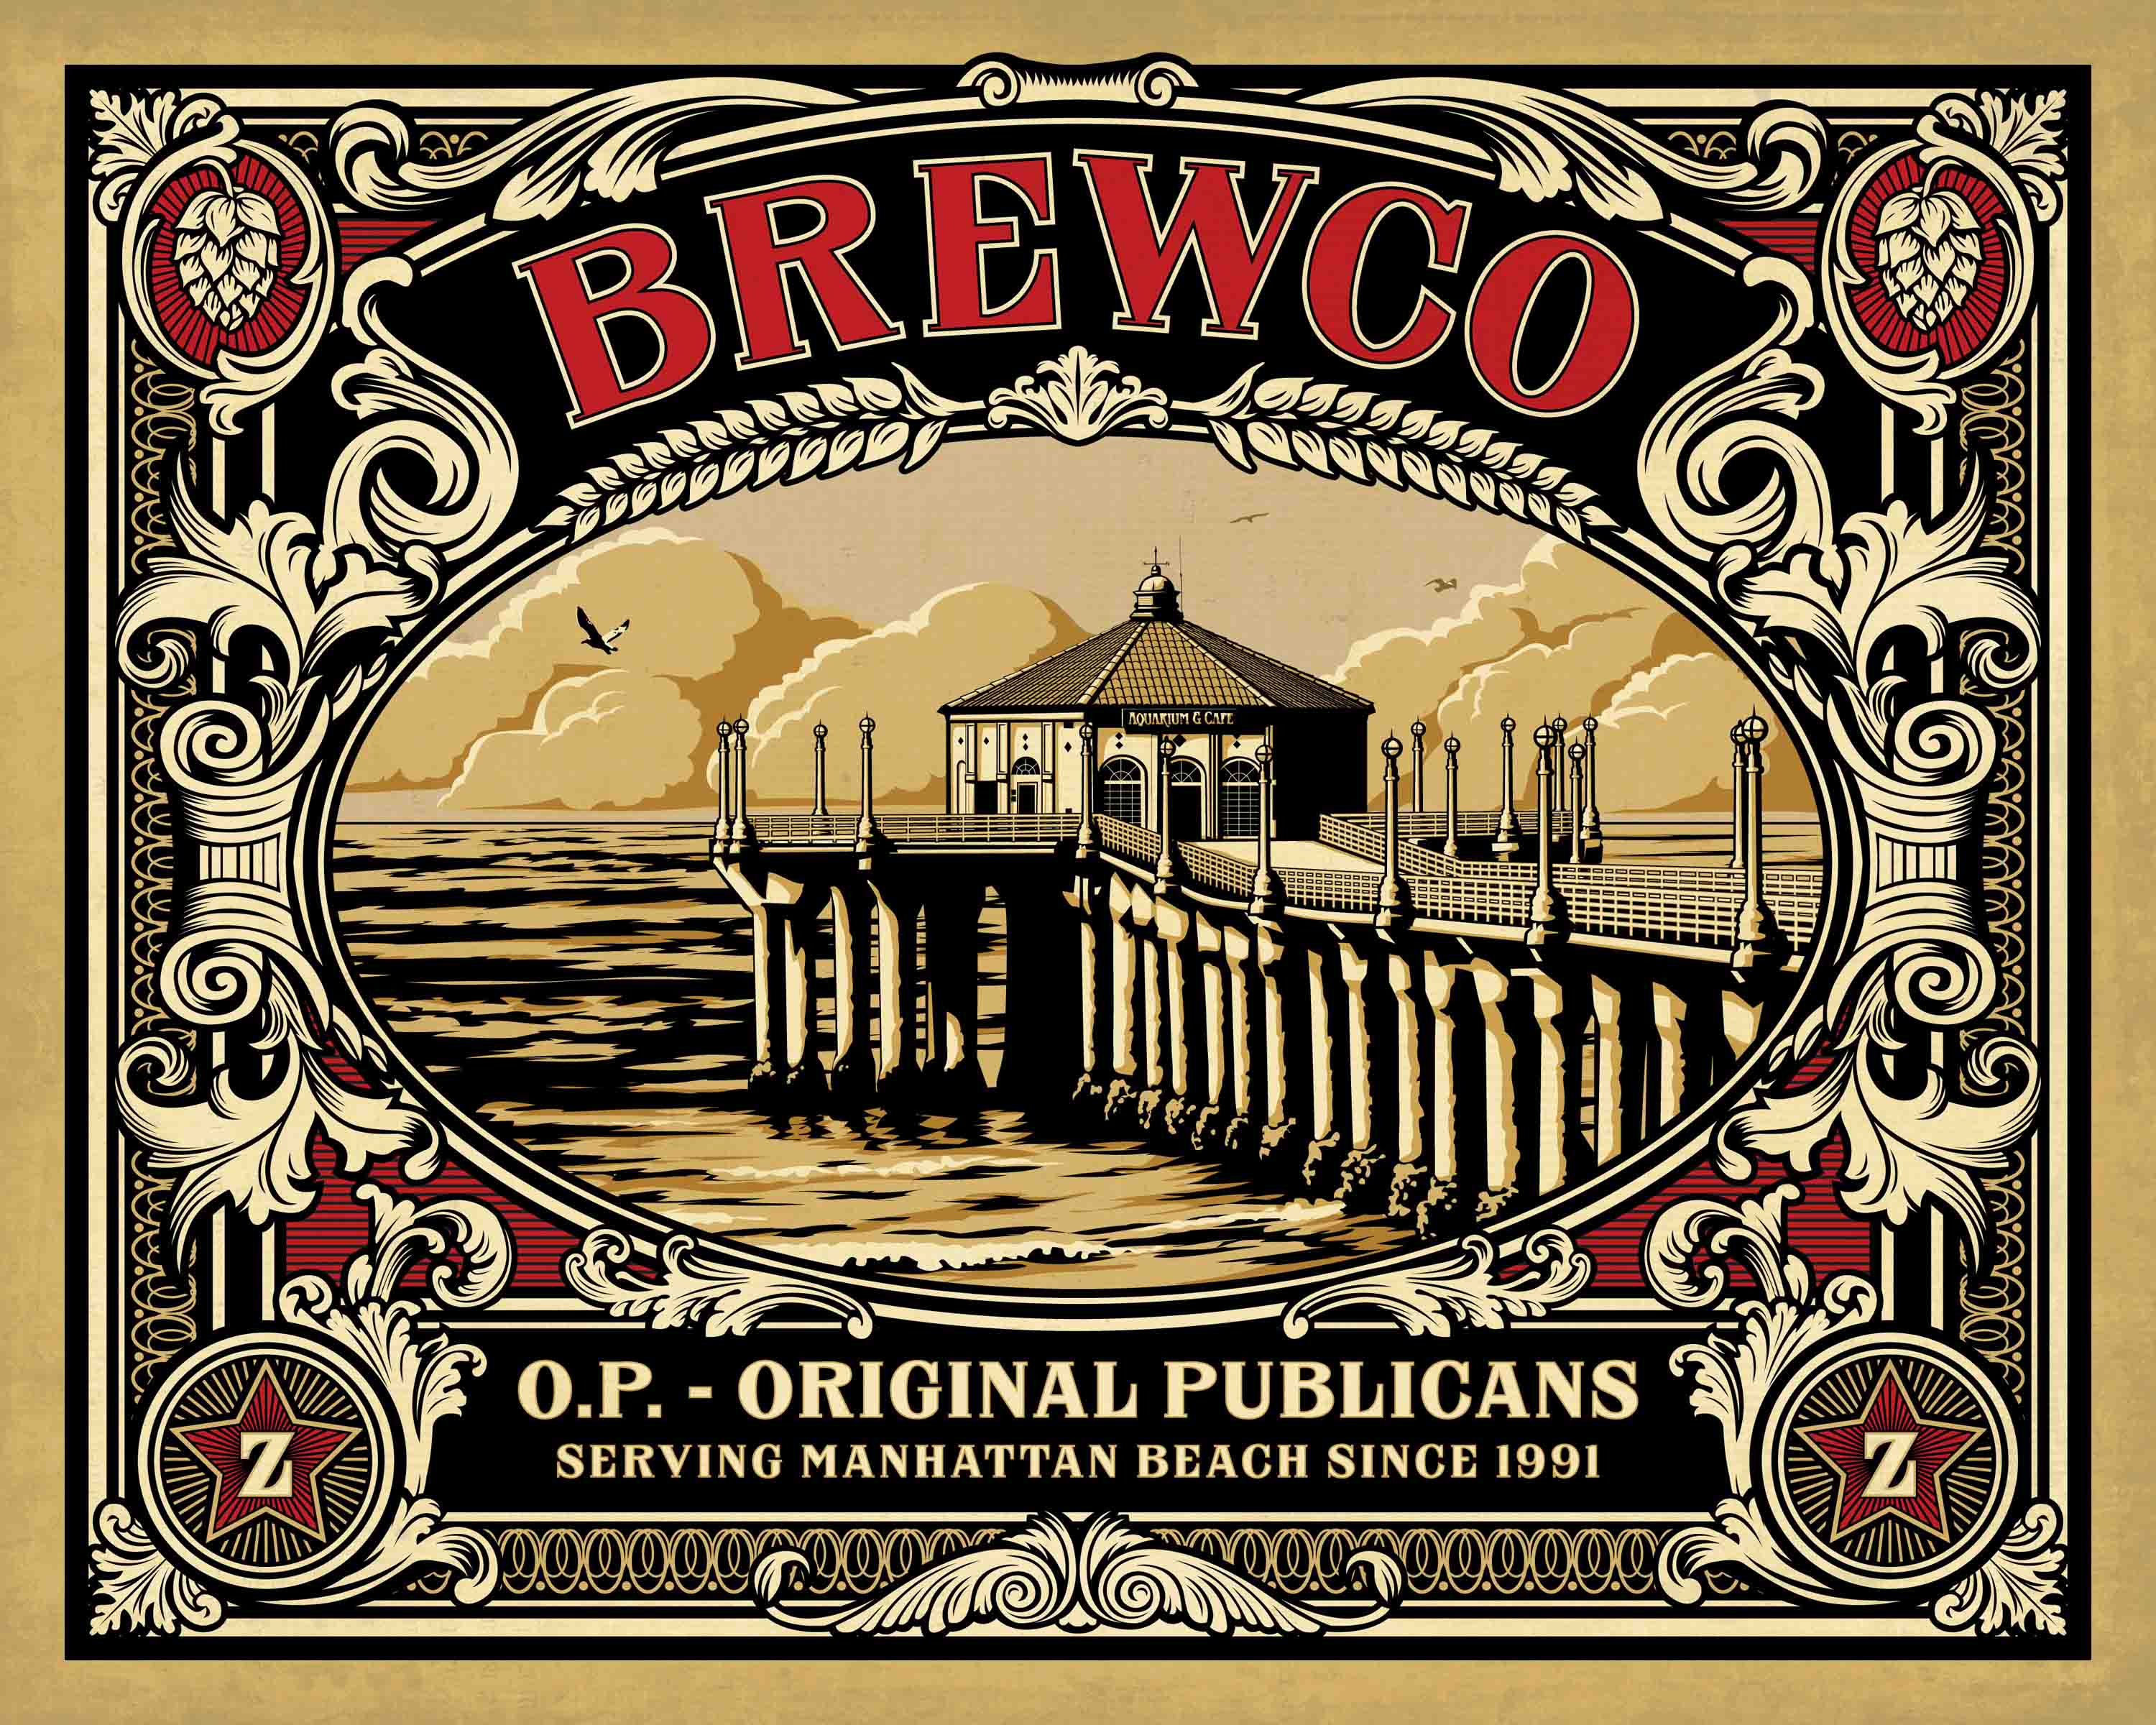 Brewco Original Publicans artwork